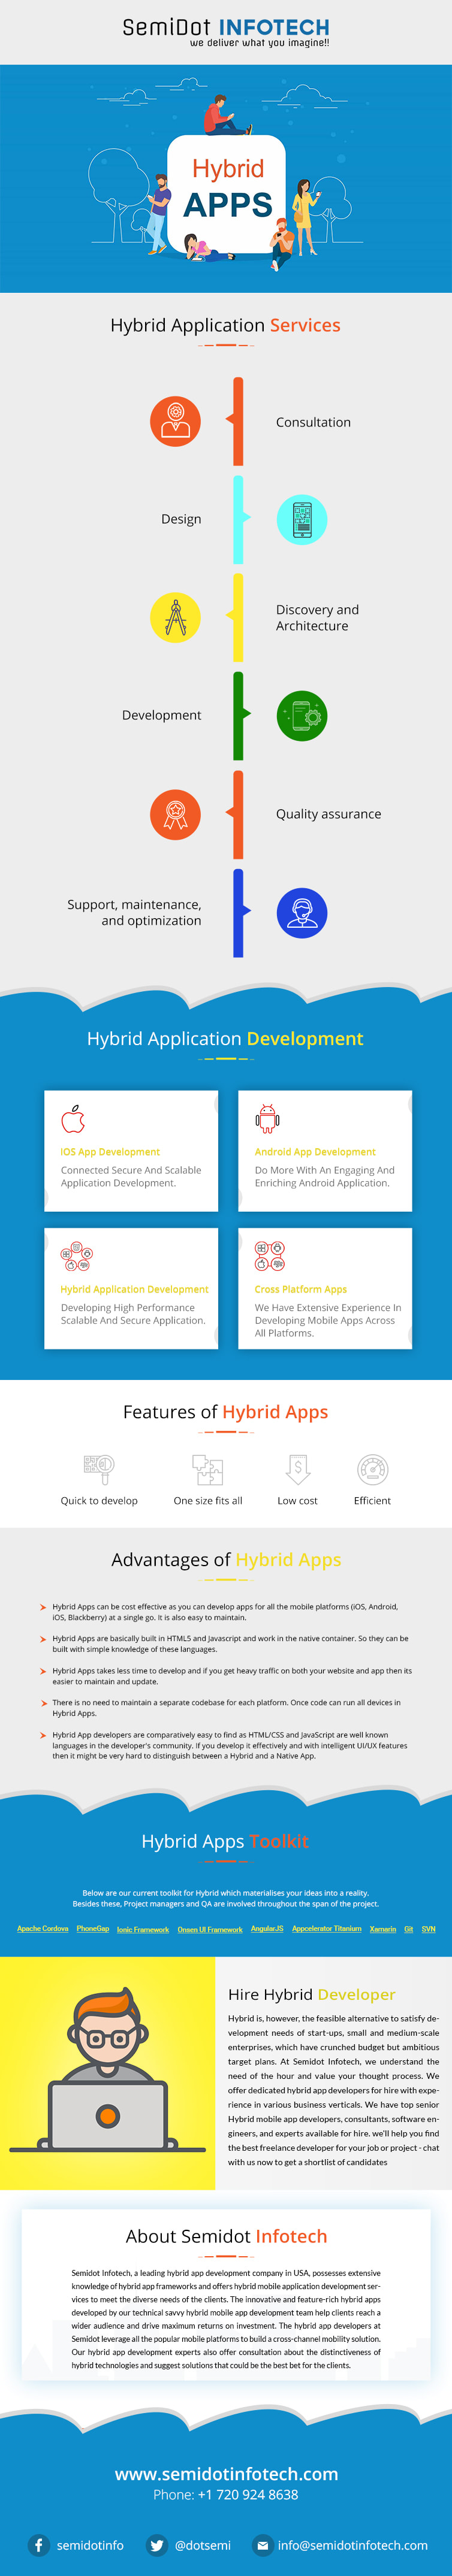 top hybrid app developers